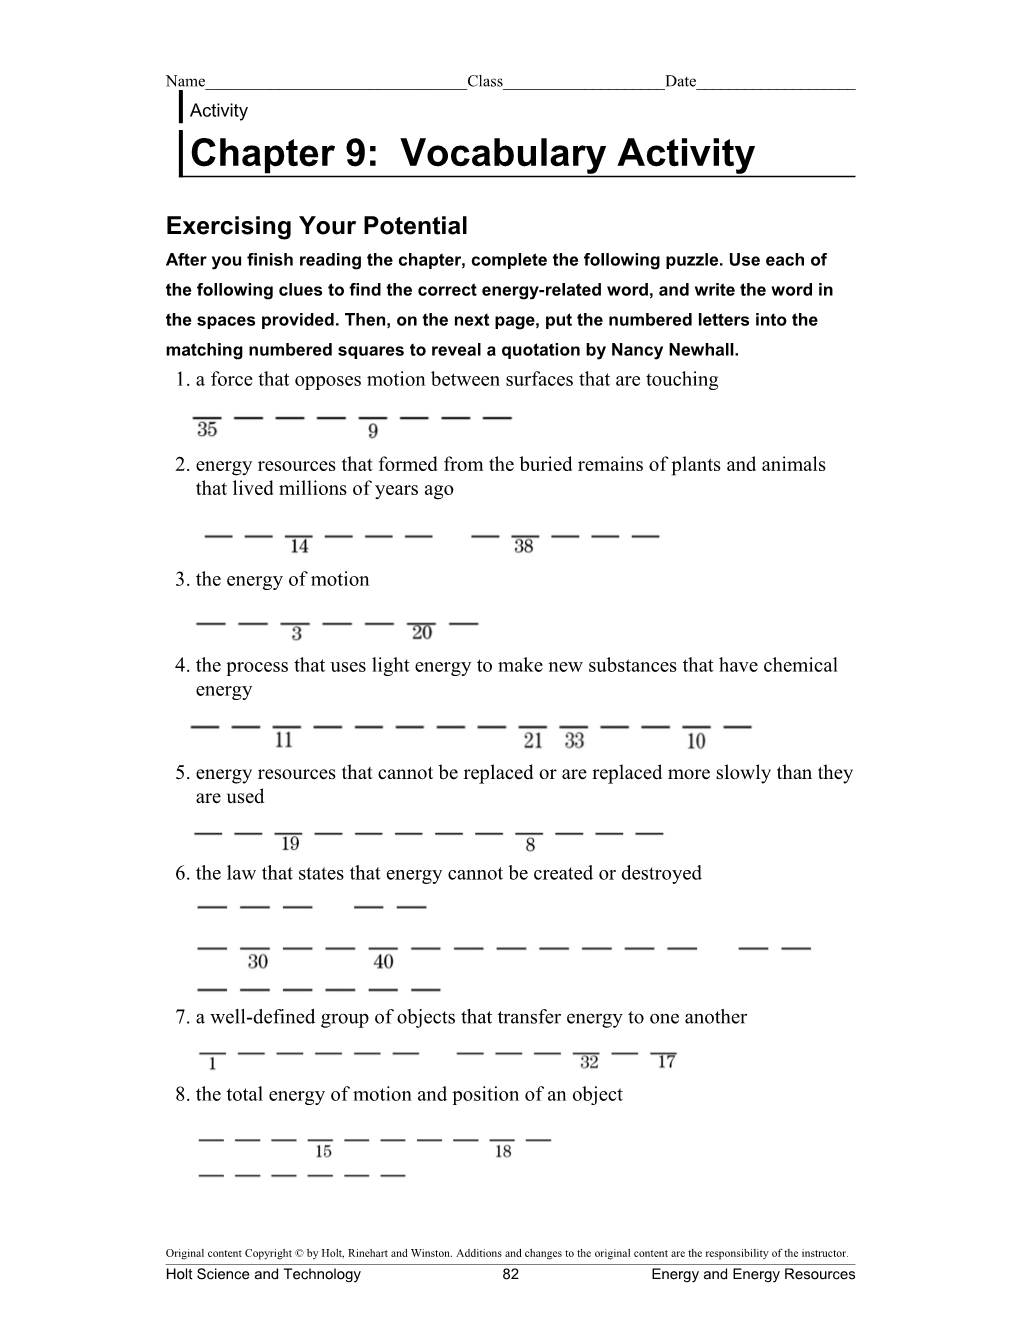 Chapter 9: Vocabulary Activity